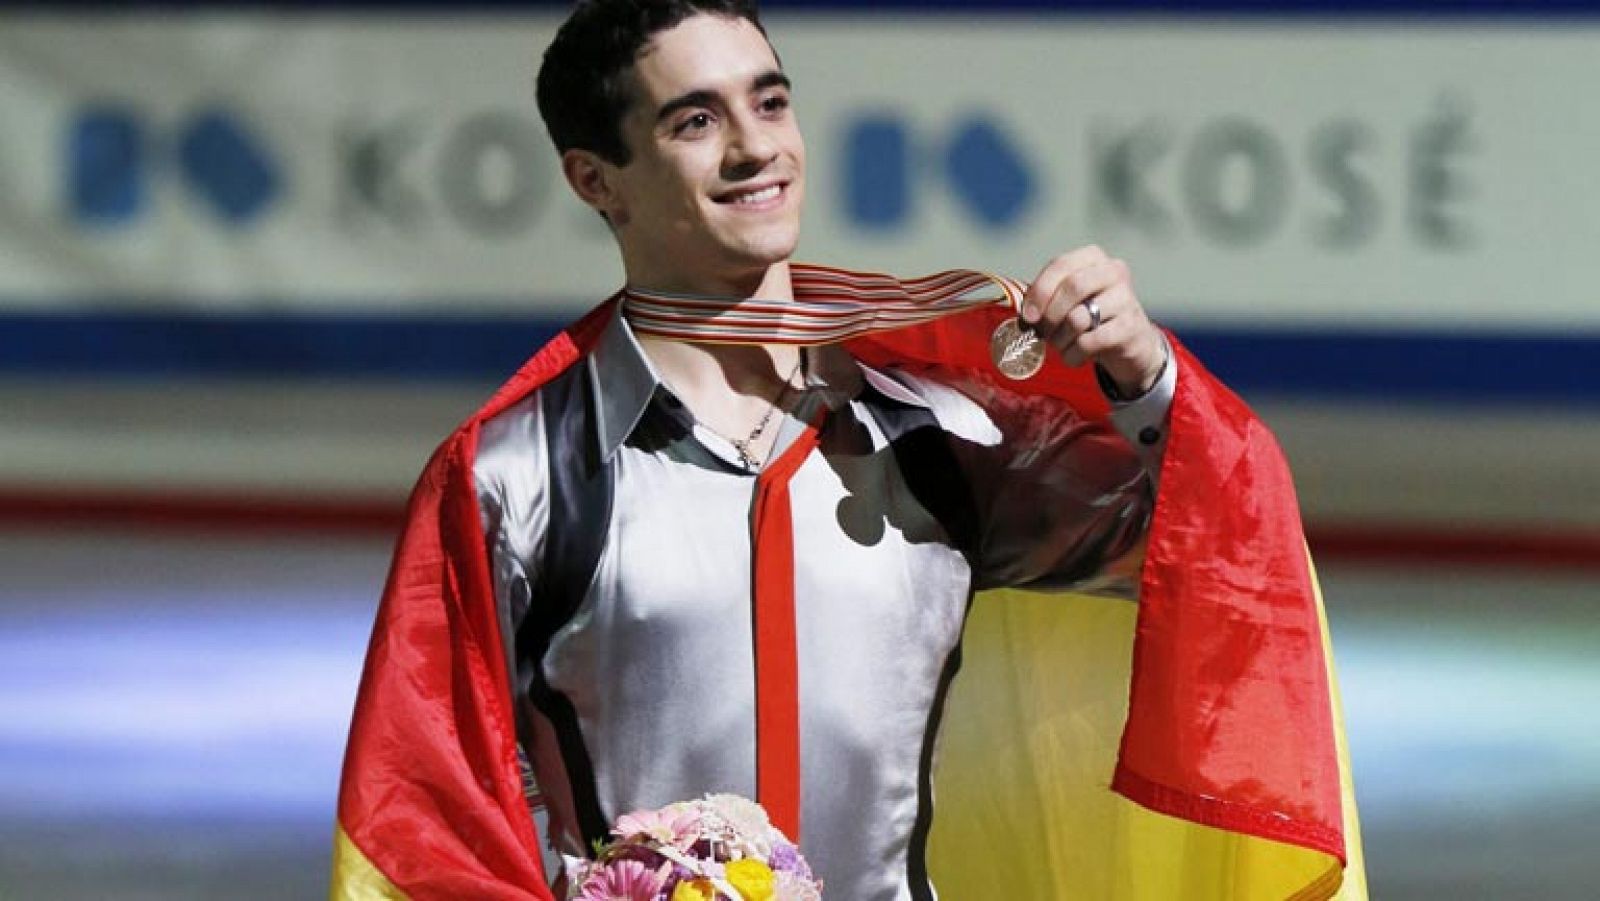 Telediario 1: Javier Fernandéz, bronce en el Mundial de patinaje | RTVE Play